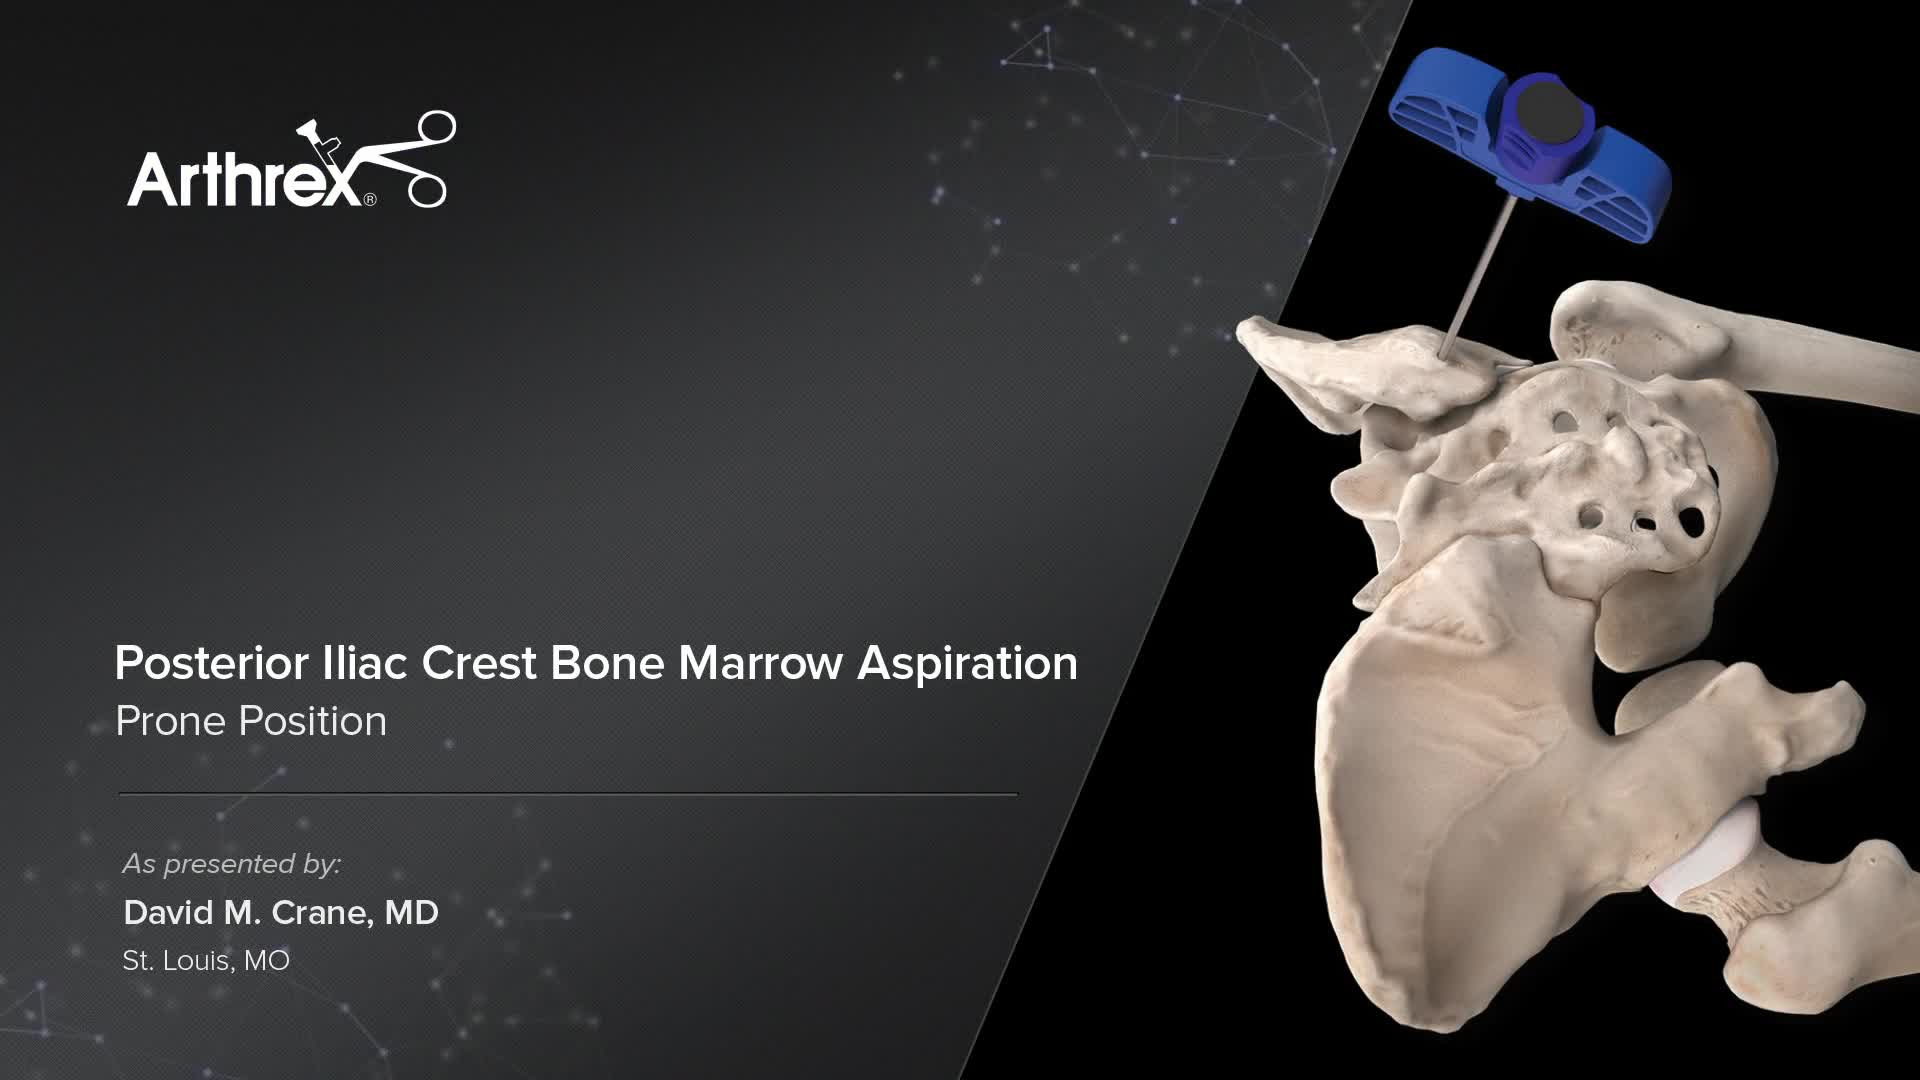 Arthrex - Posterior Iliac Crest Bone Marrow Aspiration - Prone Position